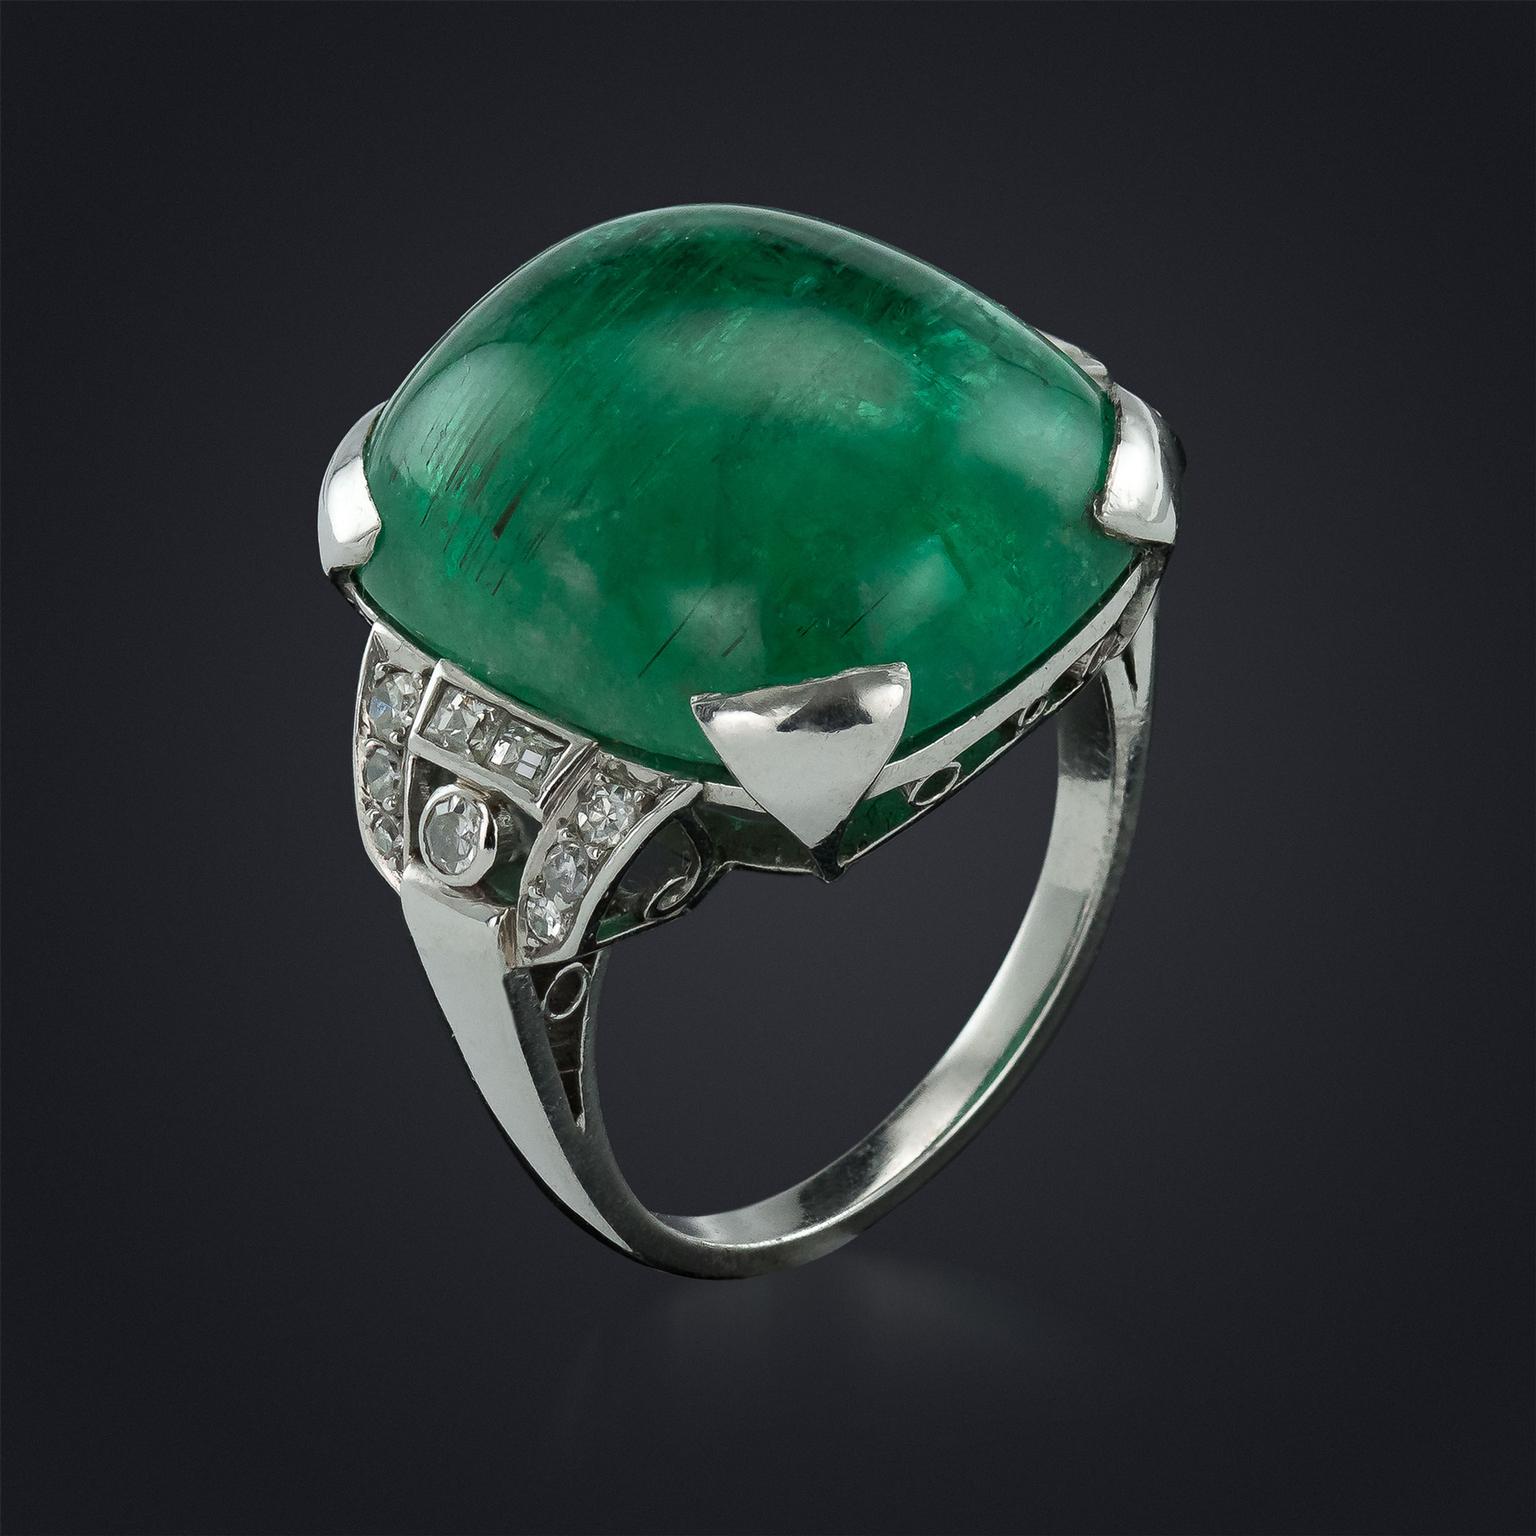 Vintage 20-carat cabochon emerald ring in platinum with diamonds